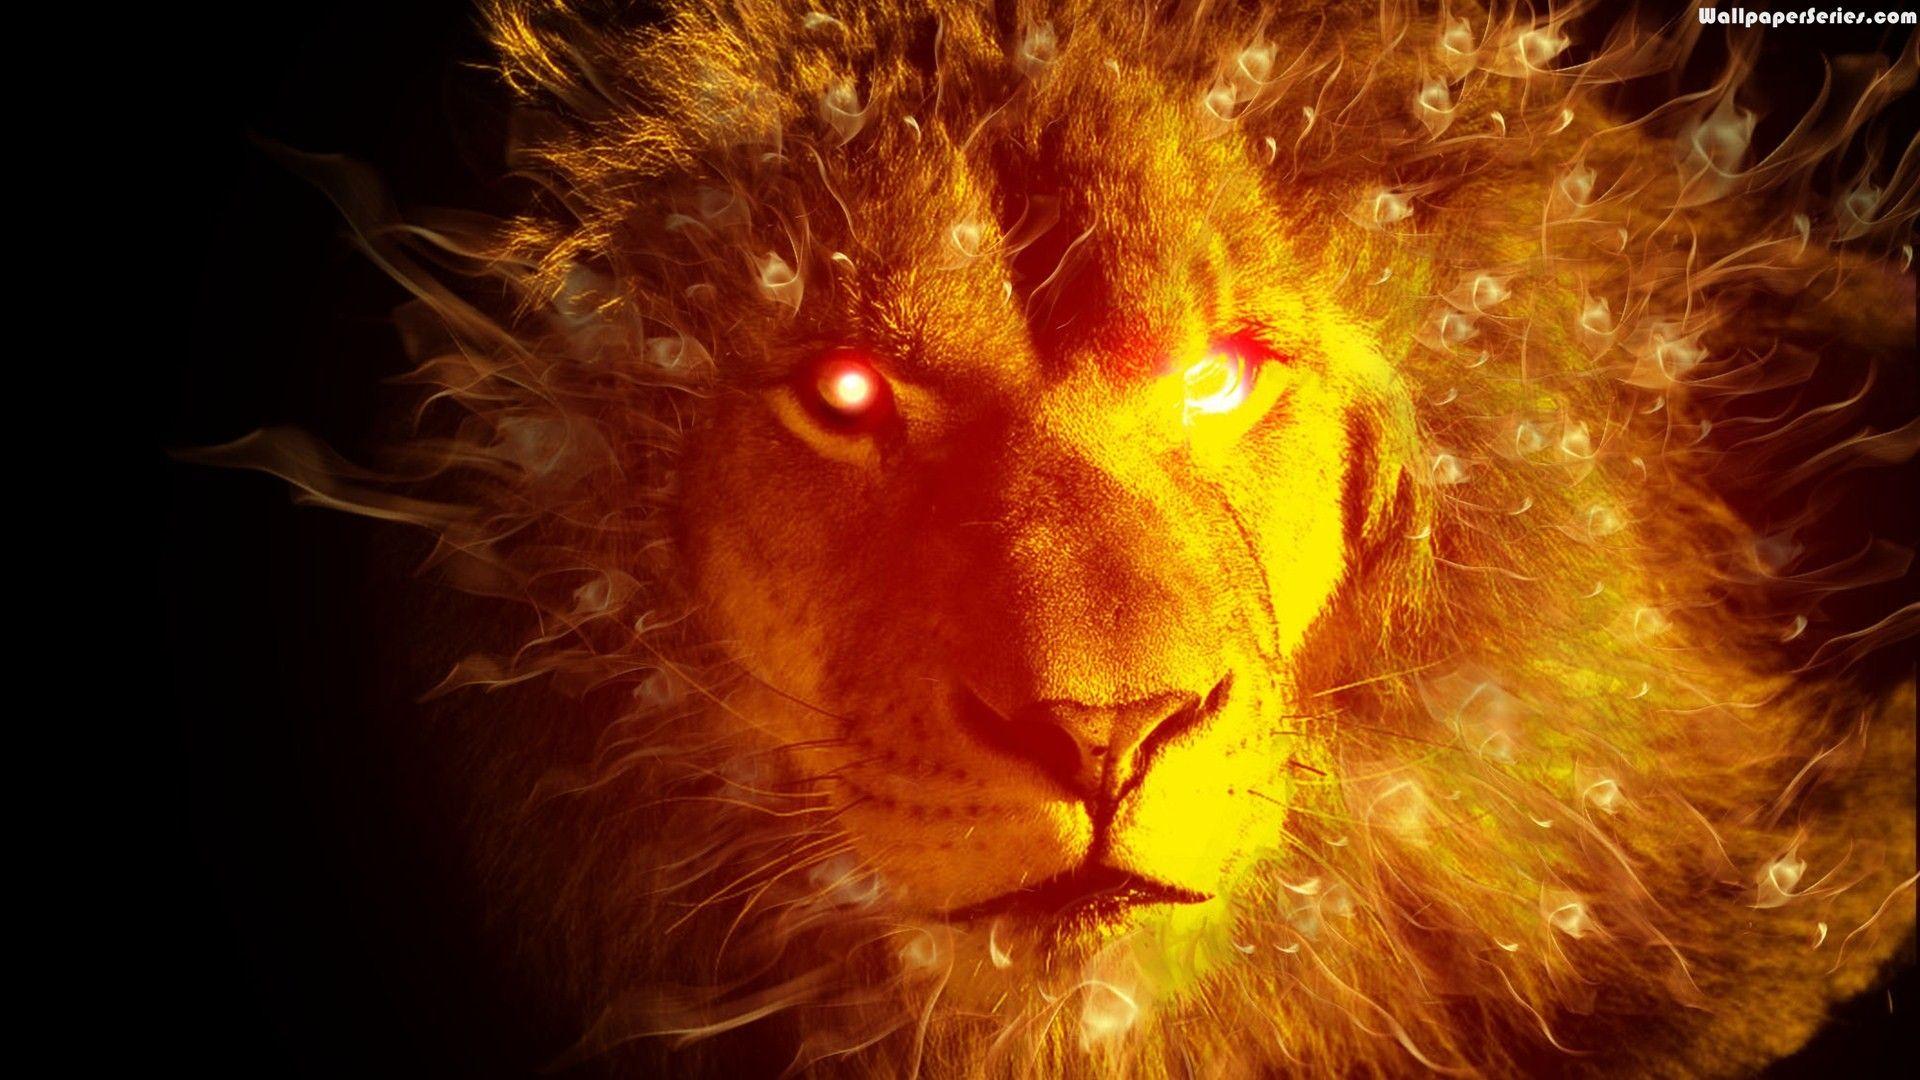 Fire Lion HD Wallpaper Free Download